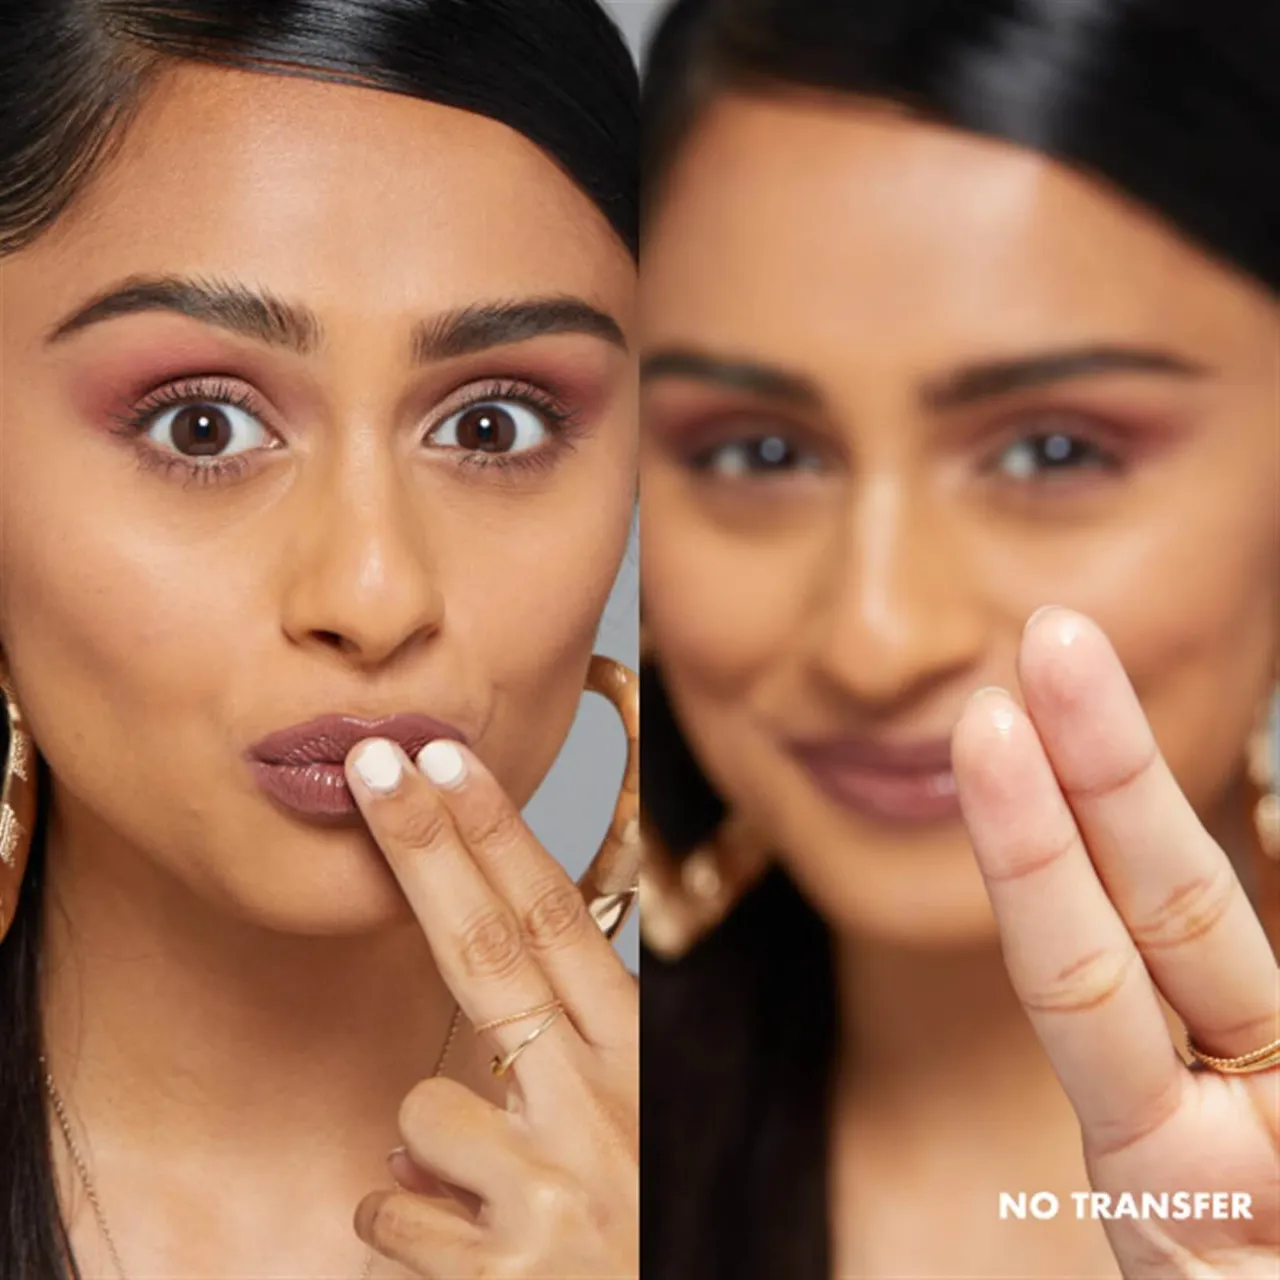 NYX Professional Makeup Shine Loud High Shine Lip Gloss 8ml (Various Shades) - Goal Getter